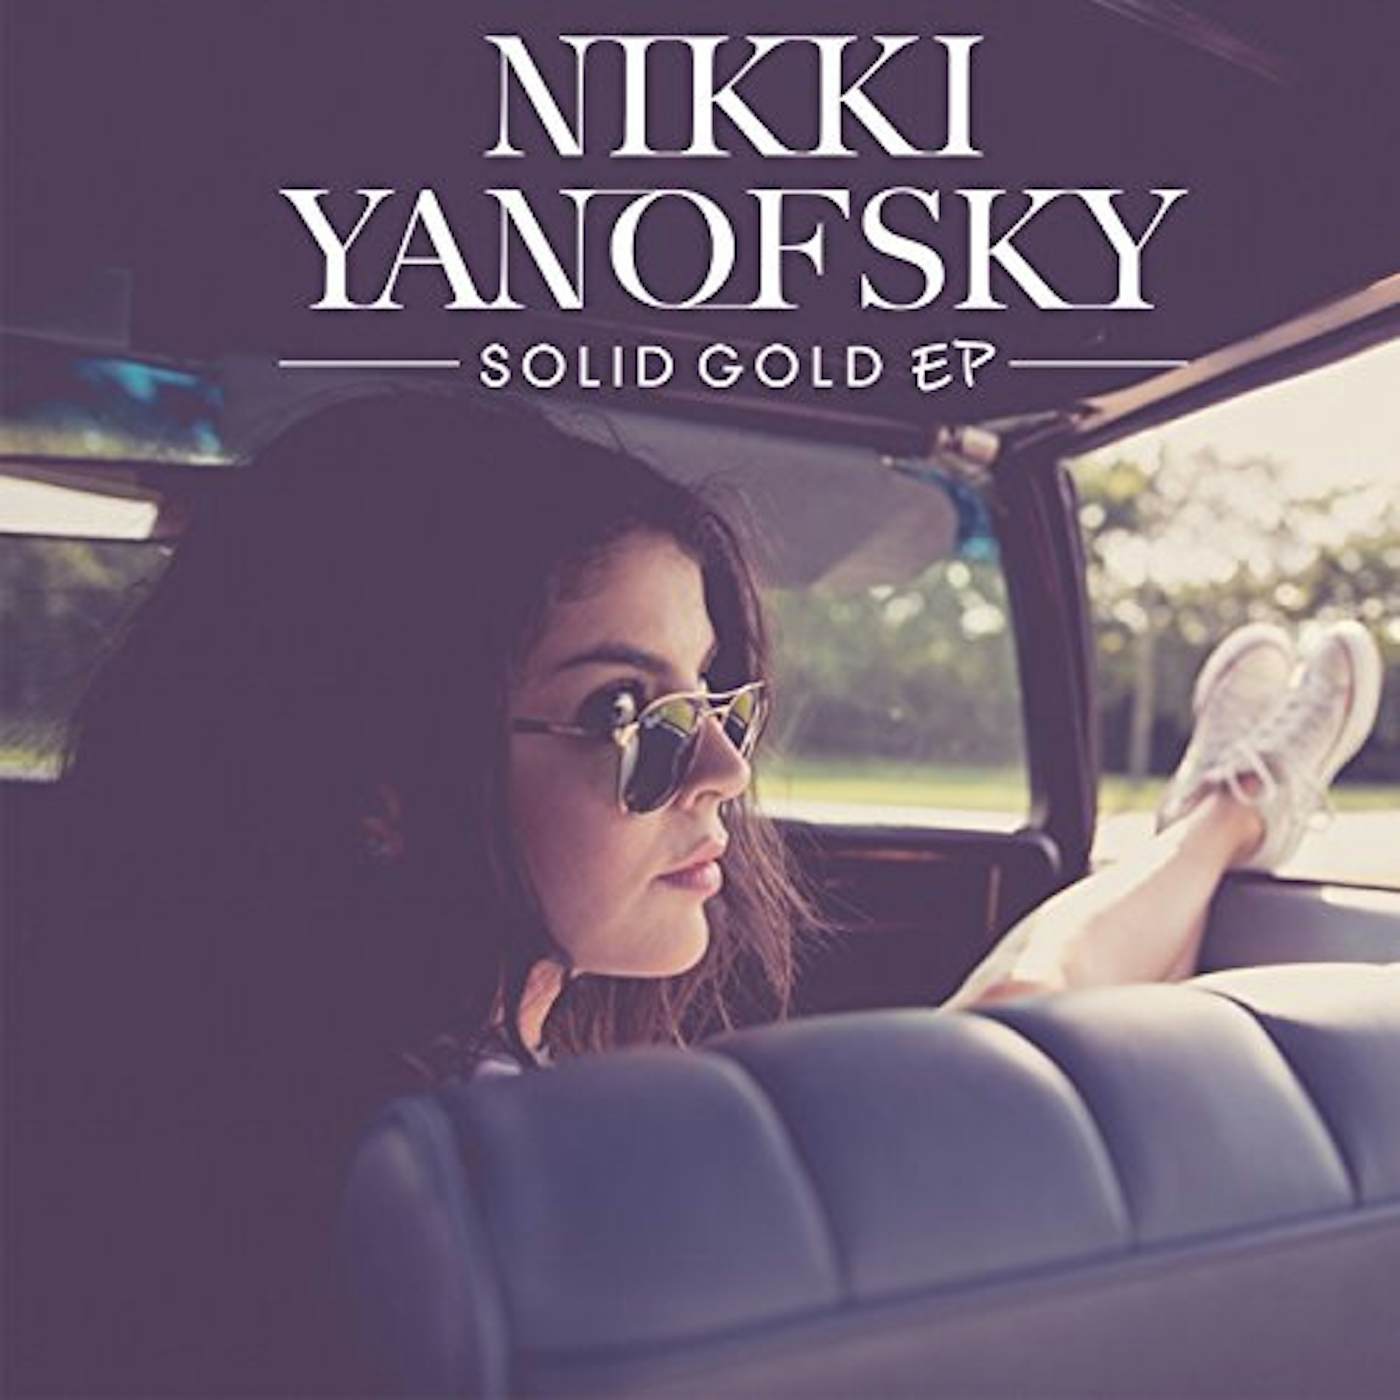 Nikki Yanofsky SOLID GOLD CD